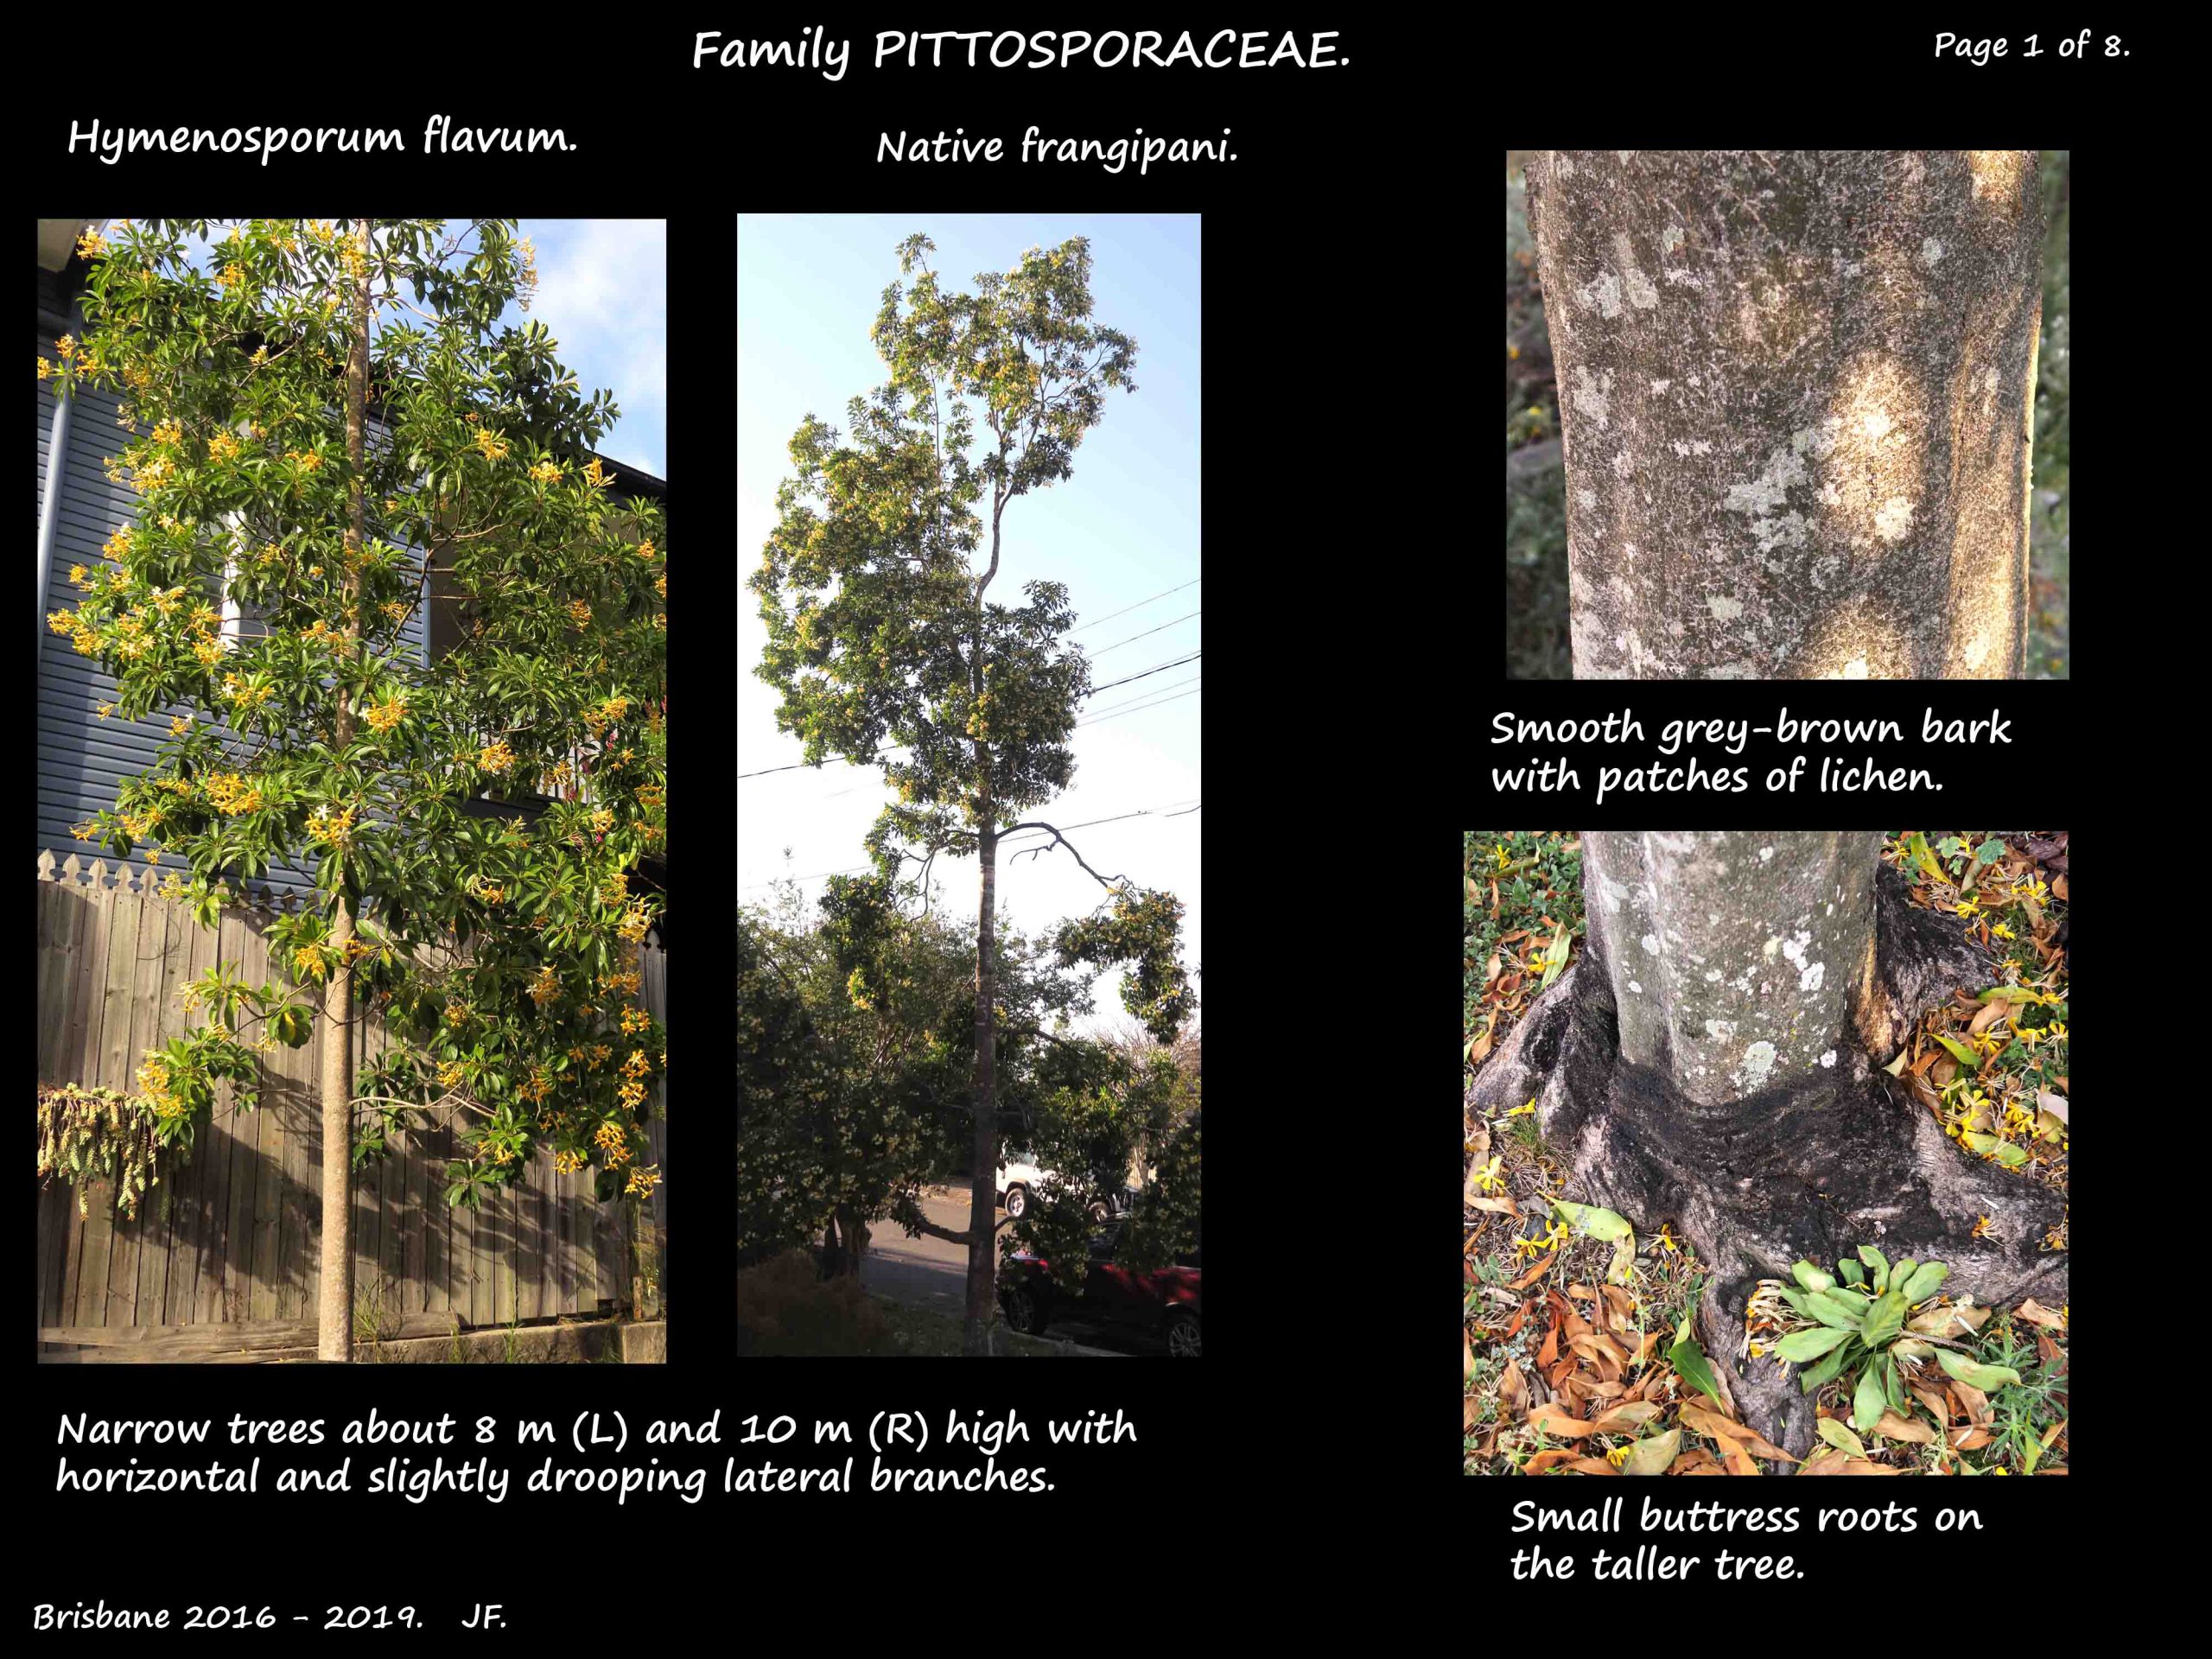 1 Hymenosporum flavum trees